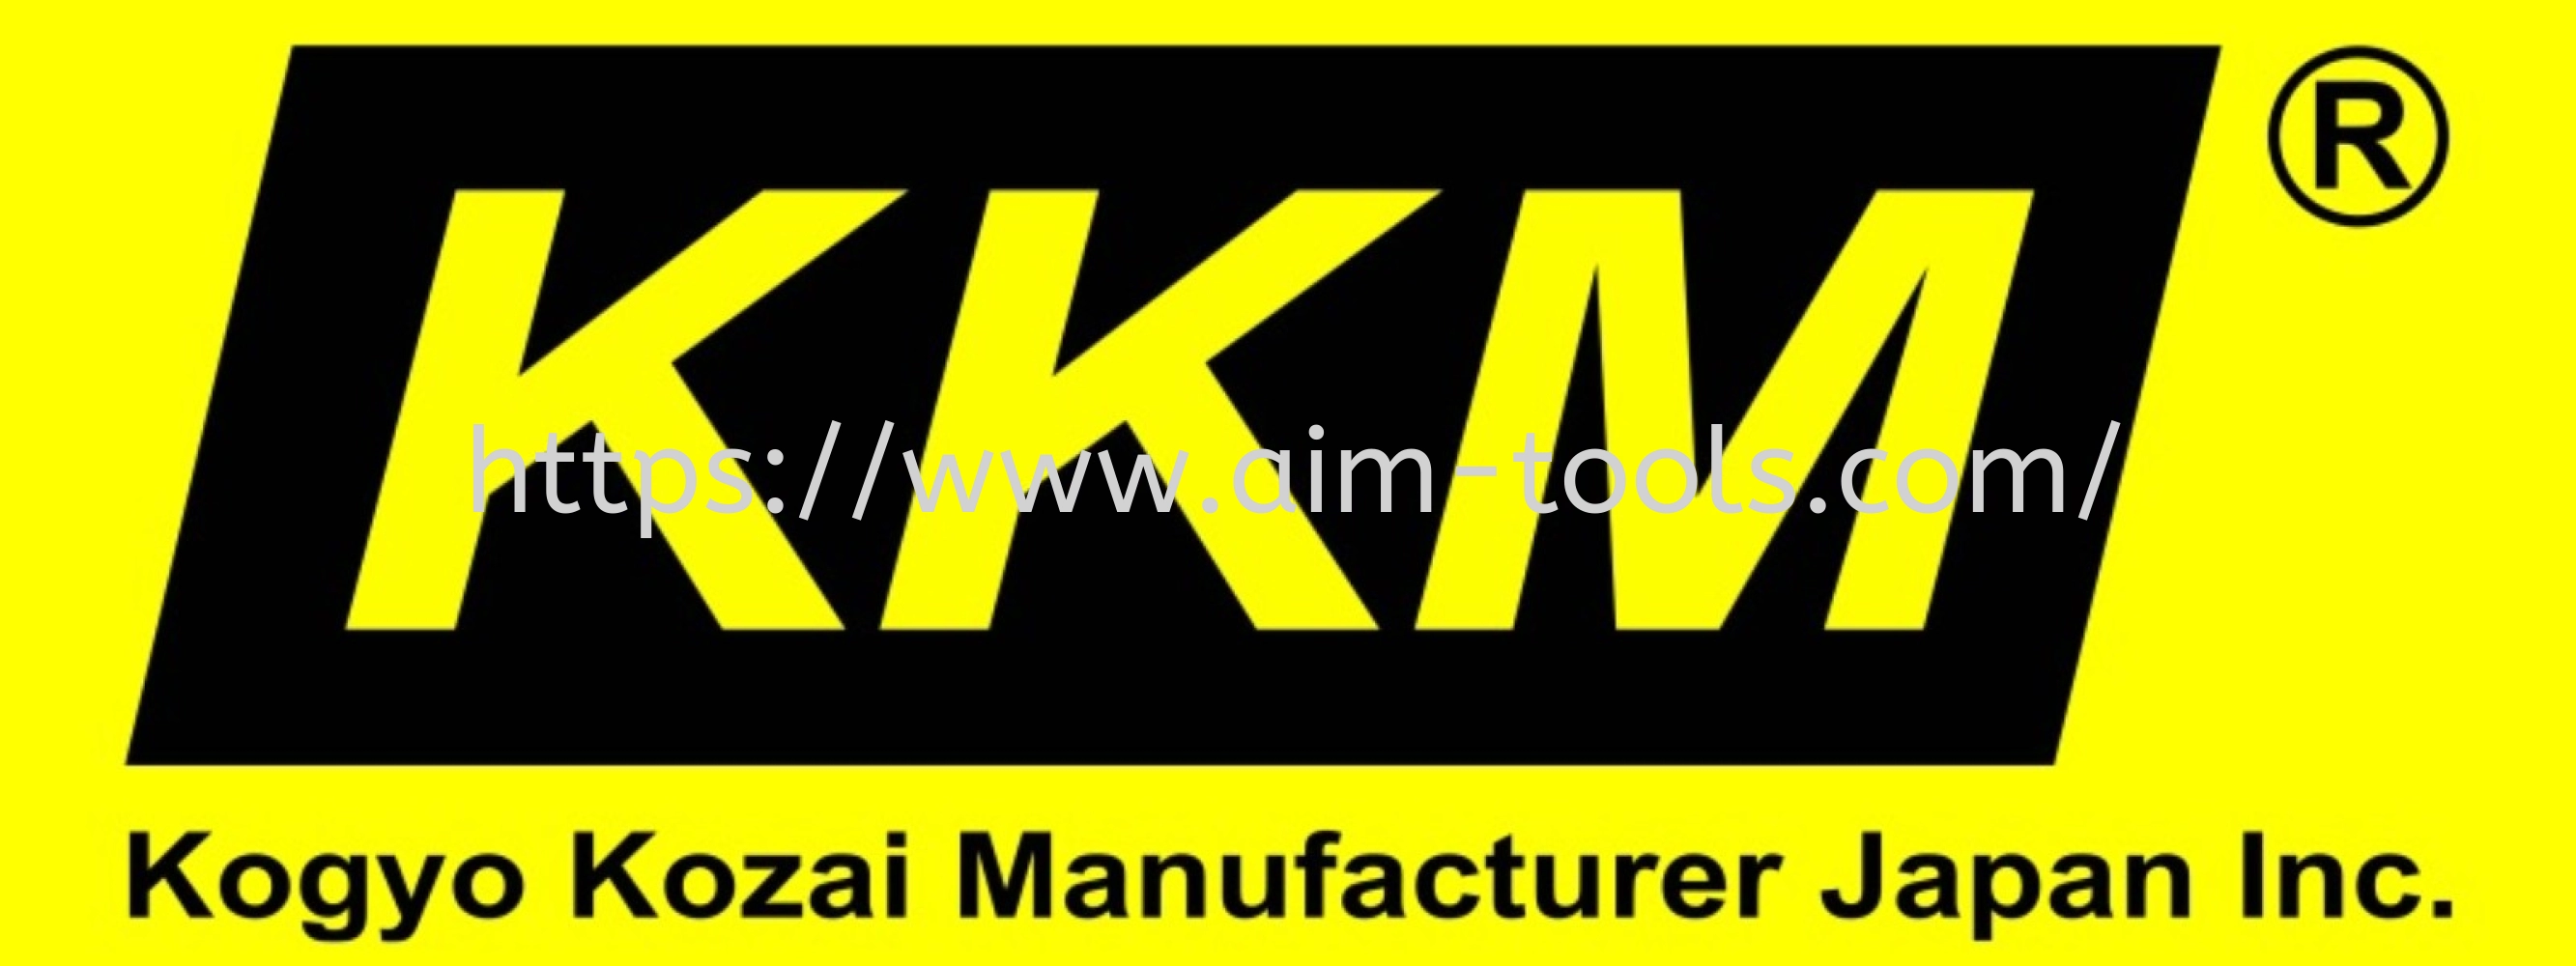 KKM 355MM CUT-OFF MACHINE